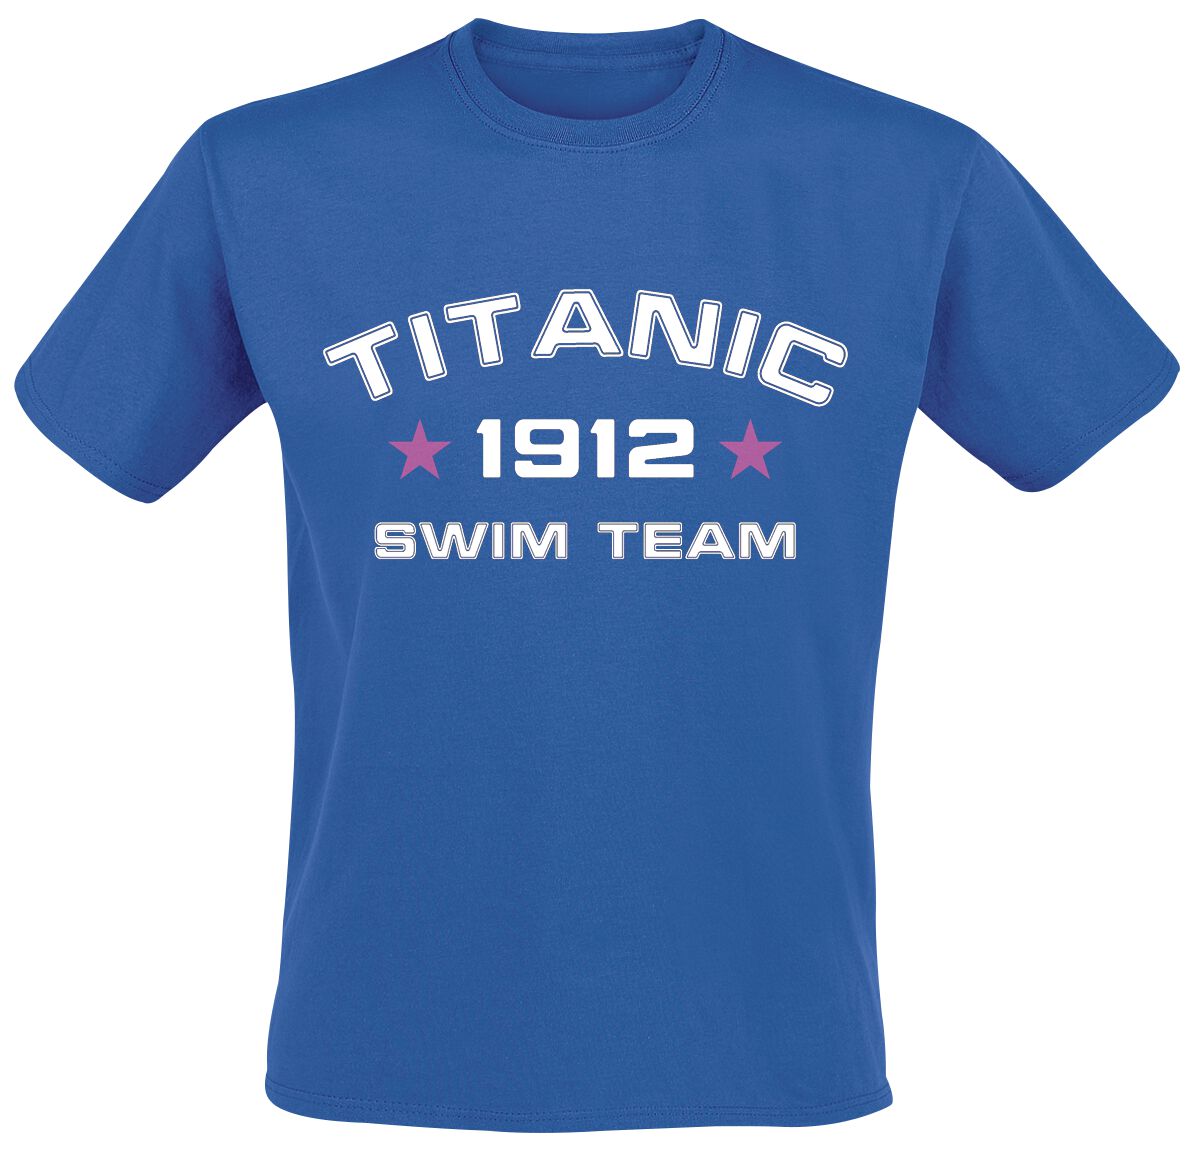 Titanic Swim Team  T-Shirt royal